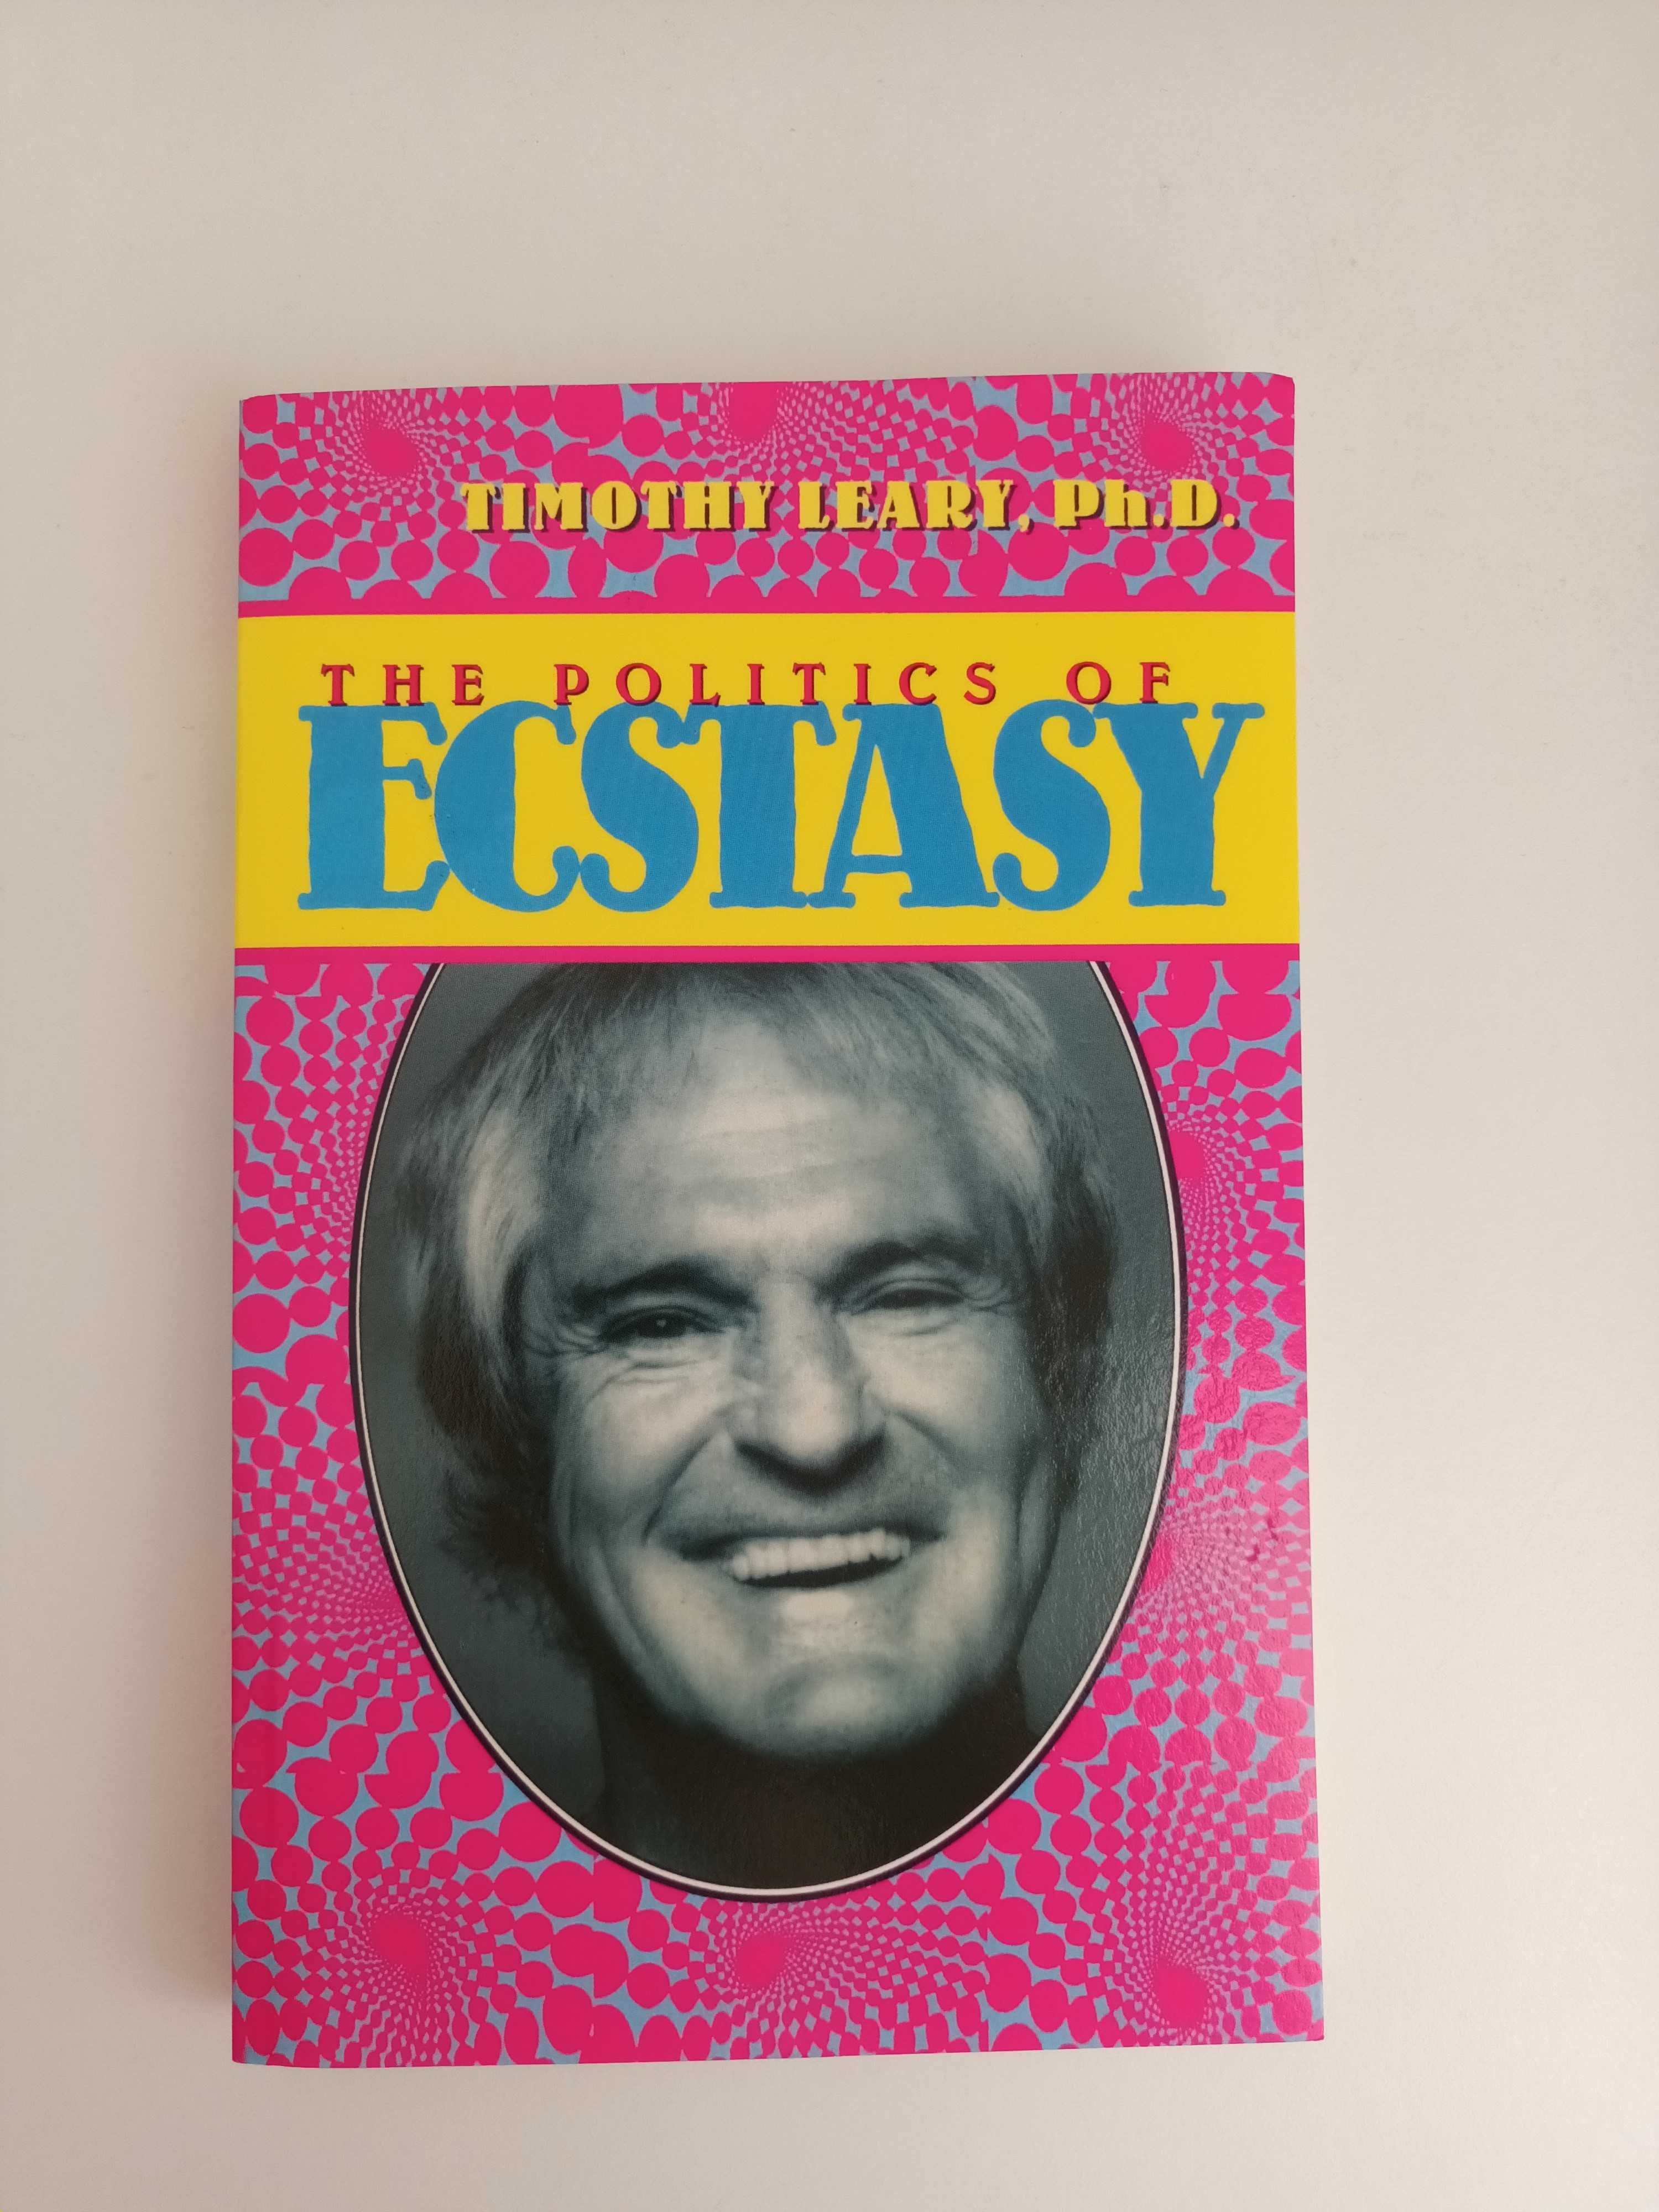 Livro The Politics of Ecstasy de Timothy Leary